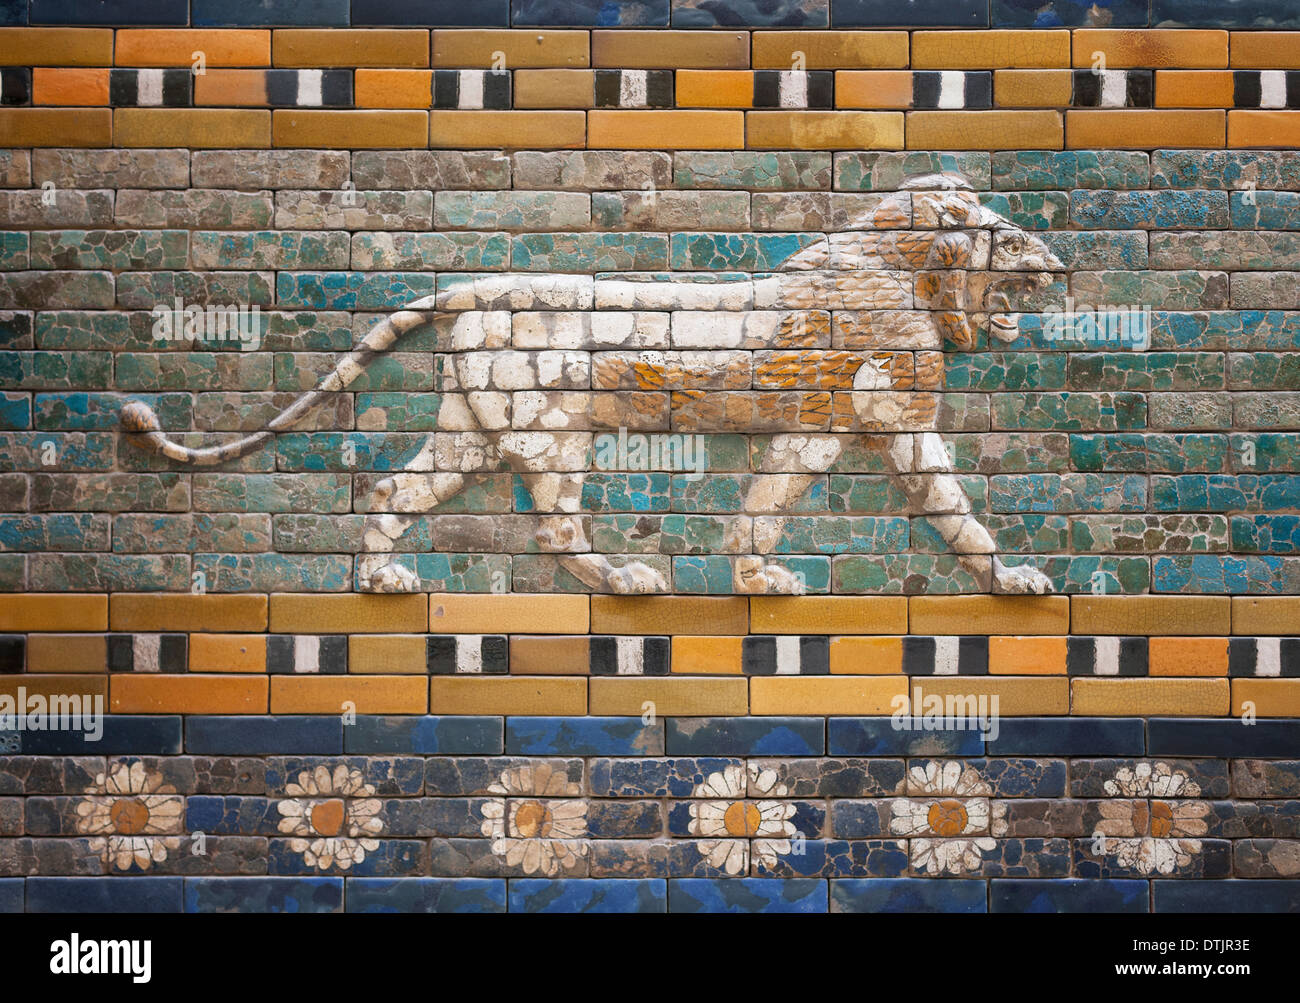 Berlin,Pergamon museum,Ishtar gate,reconstruction, ornament tiles,lion,detail Stock Photo